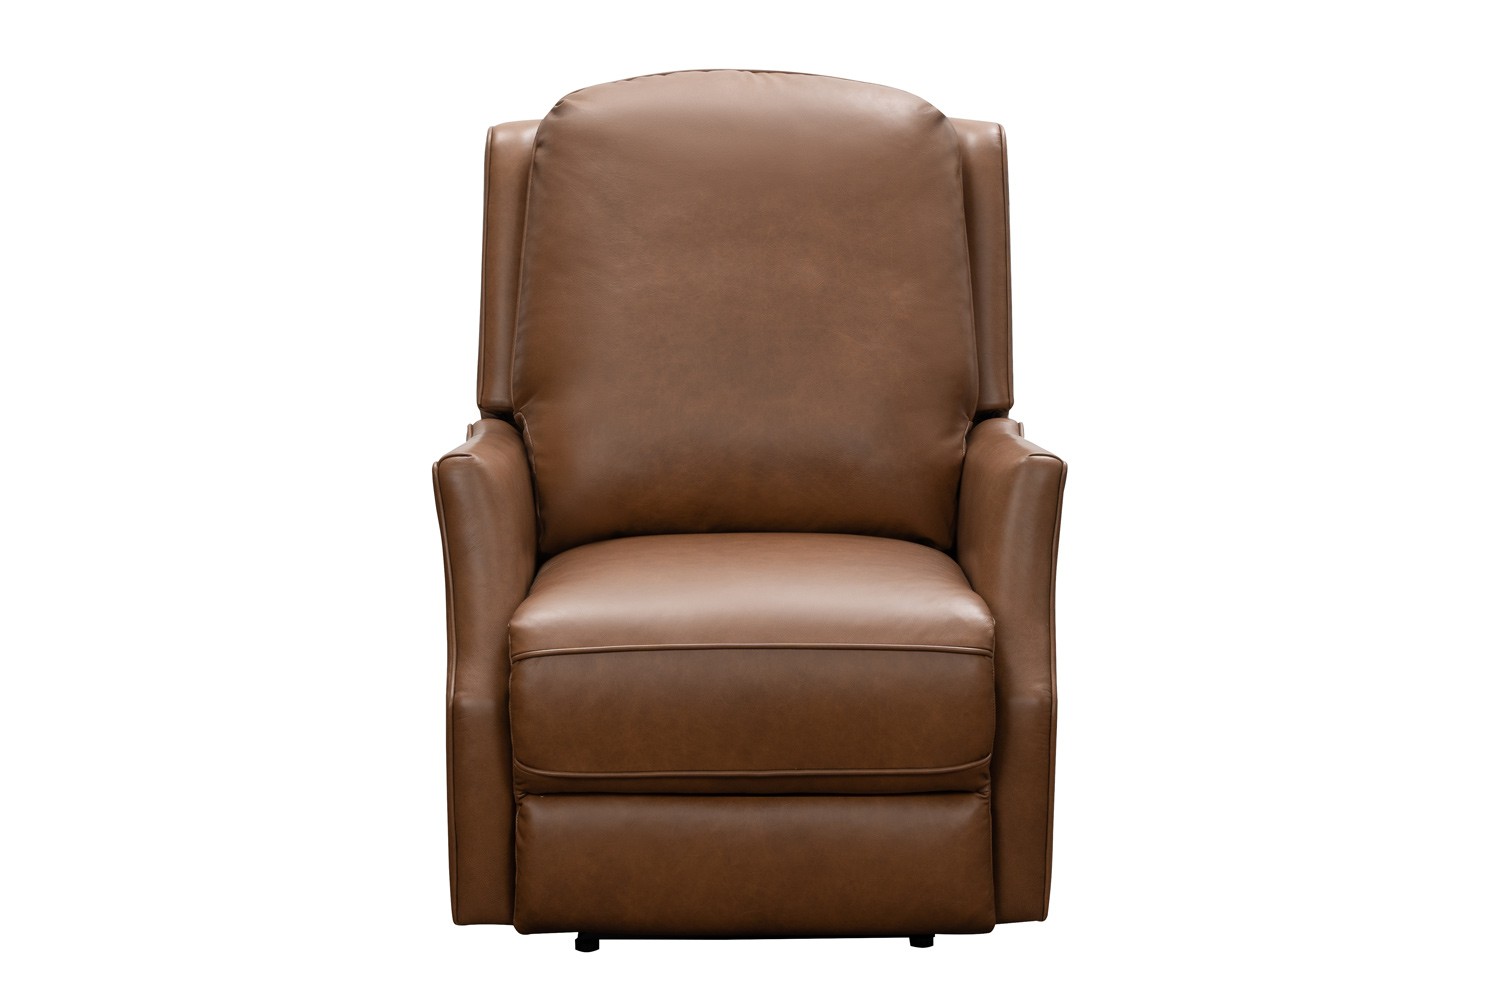 Barcalounger Springfield Power Recliner Chair - Bennington Saddle/All Leather